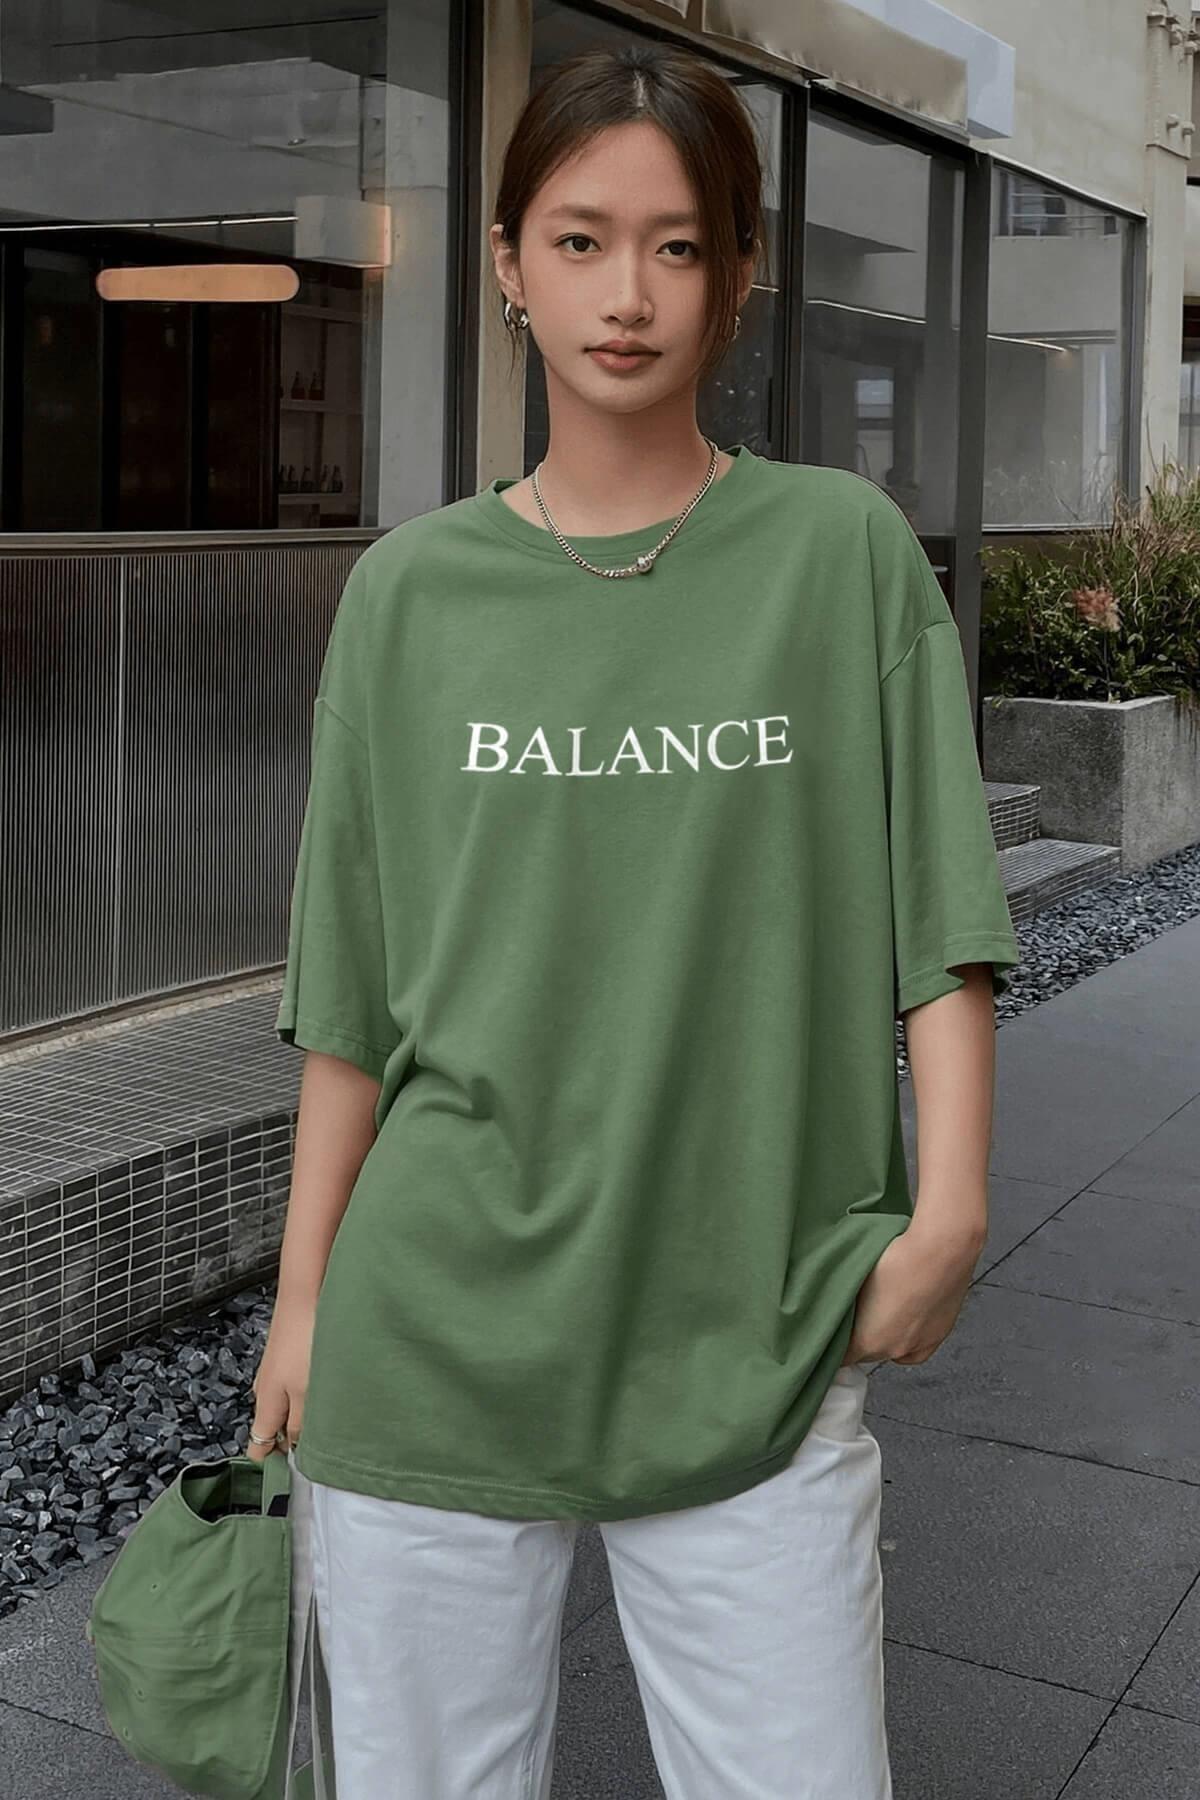 تی شرت زنانه سبز روشن کد.1227